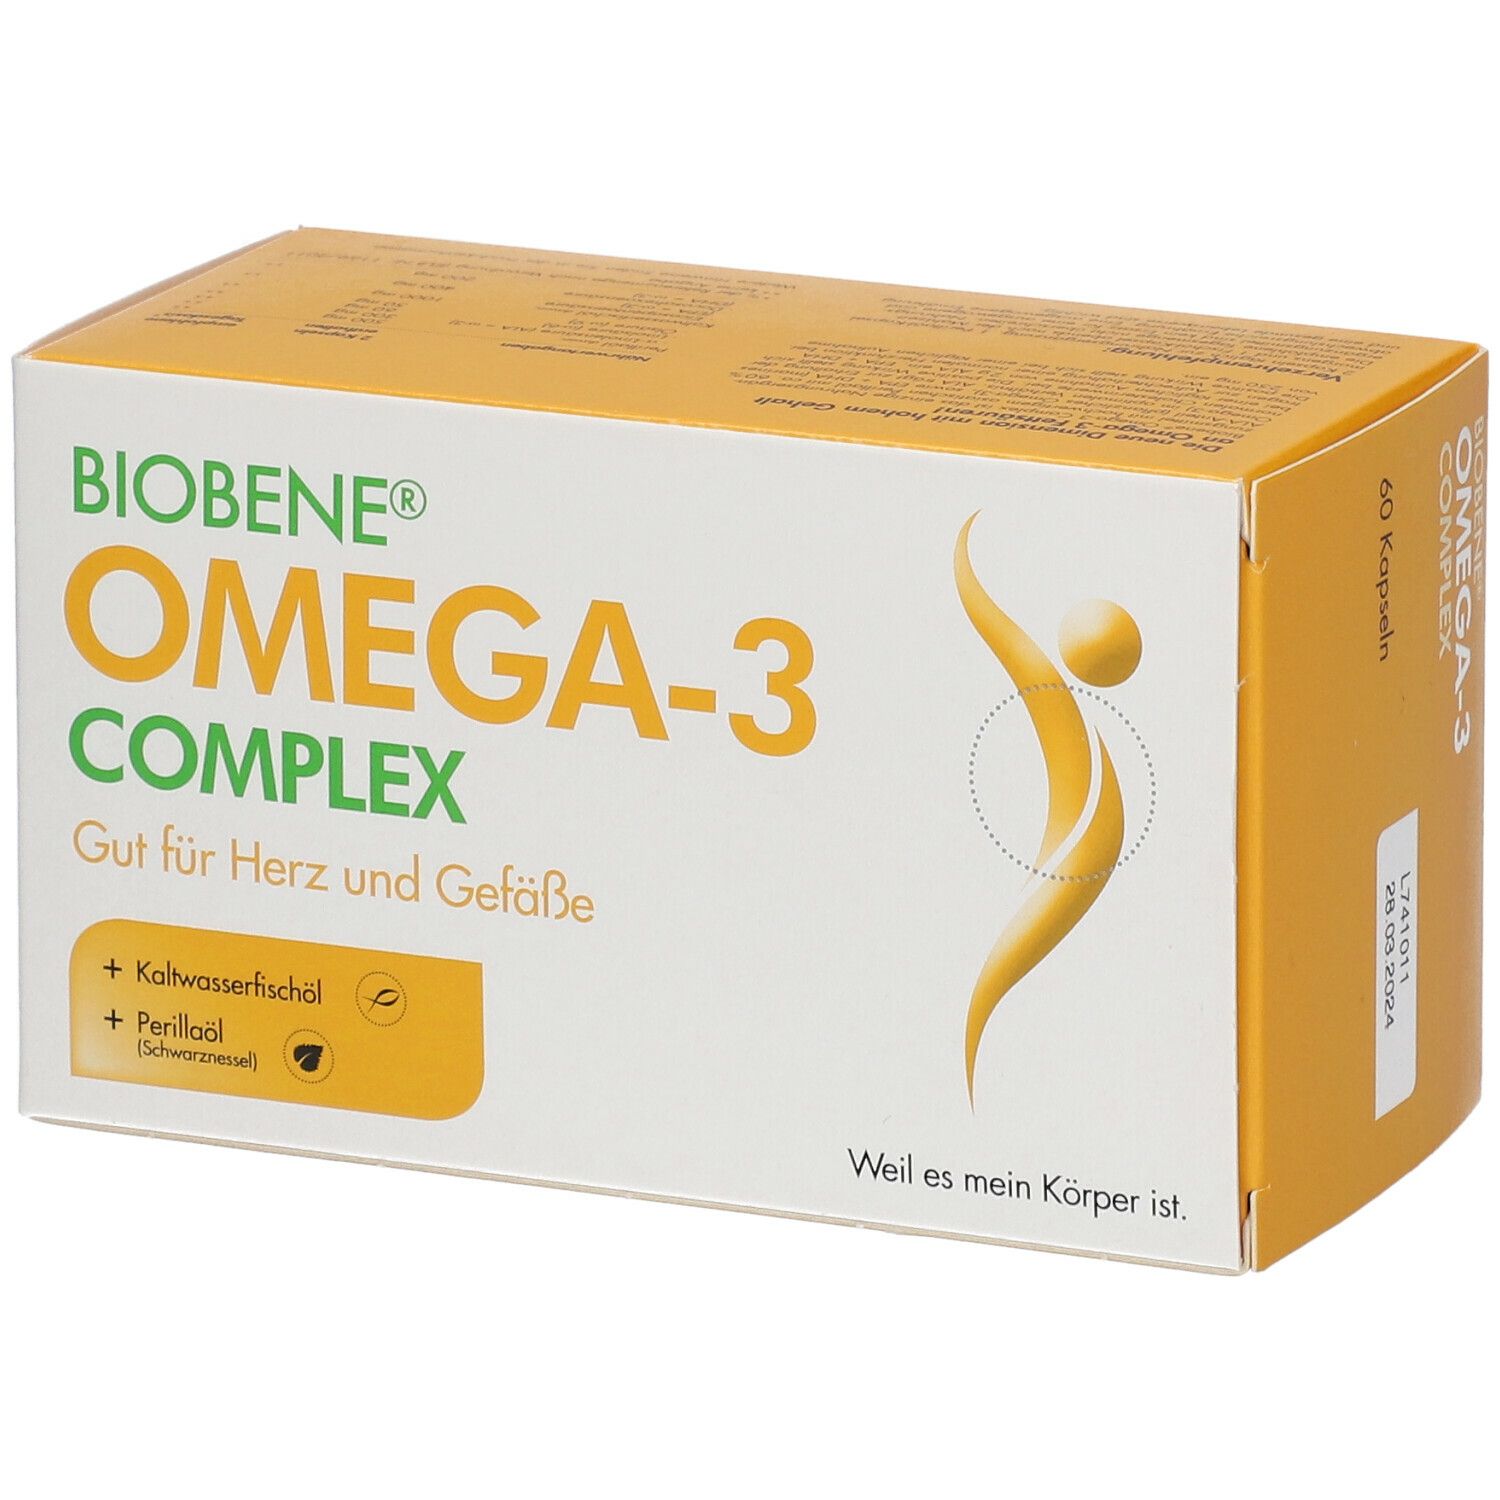 BIOBENE® OMEGA-3 Complex